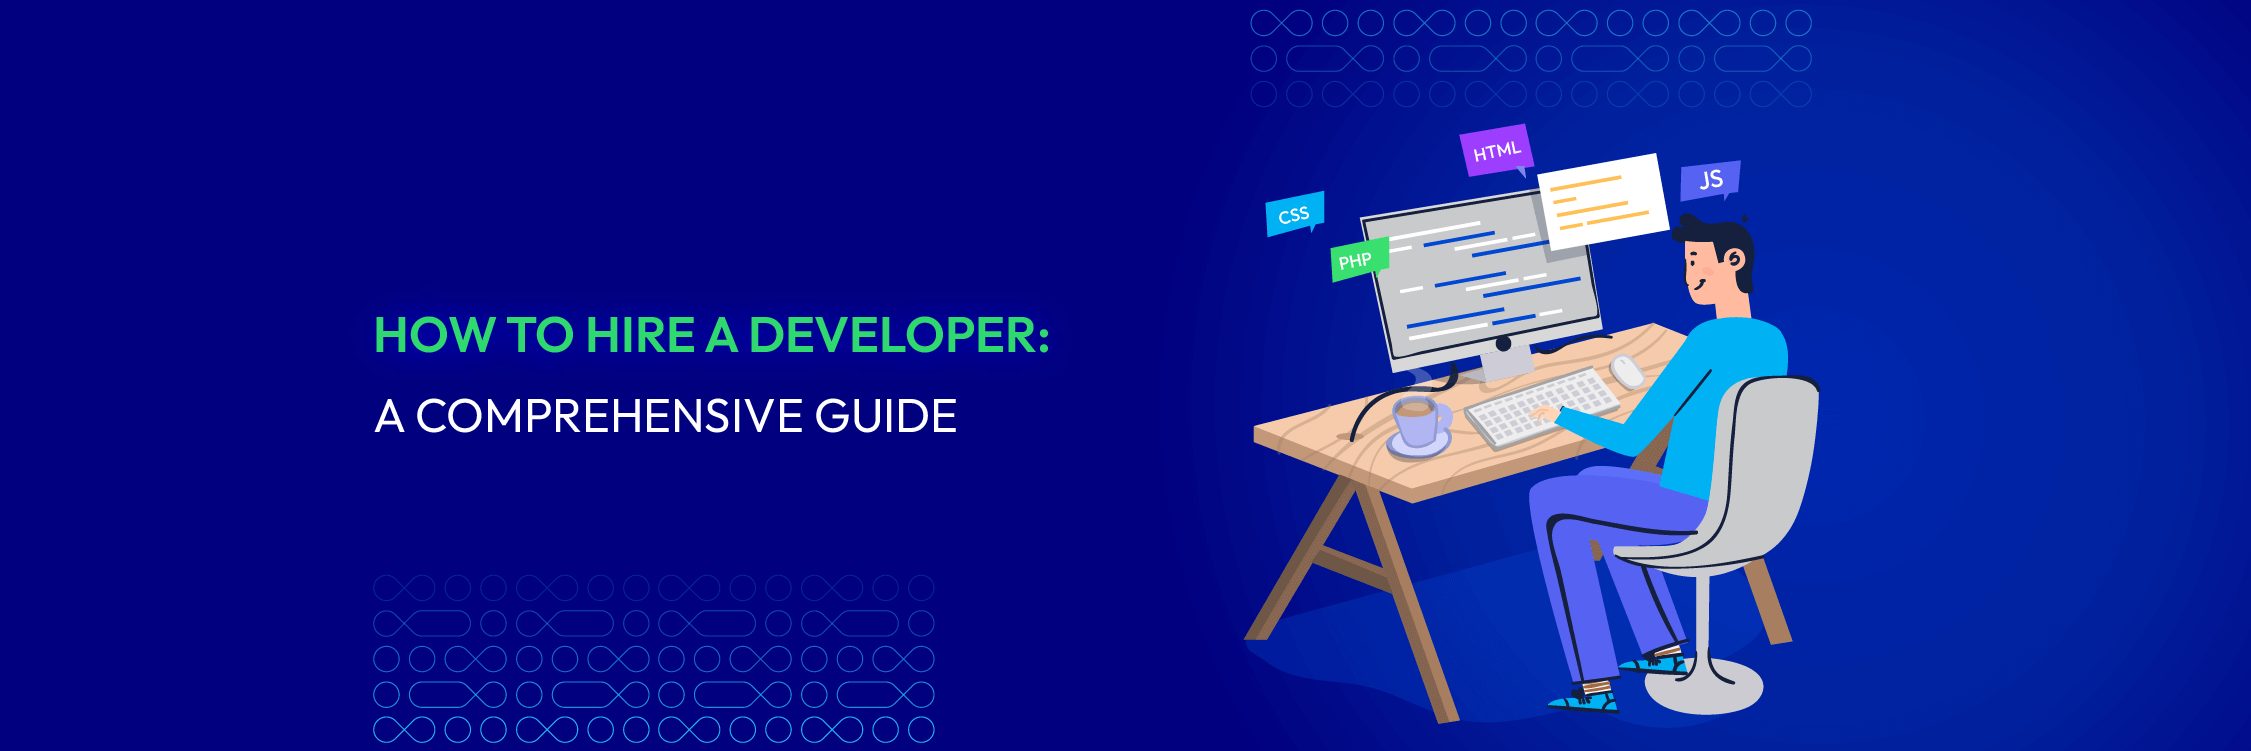 How to Hire a Developer: A Comprehensive Guide